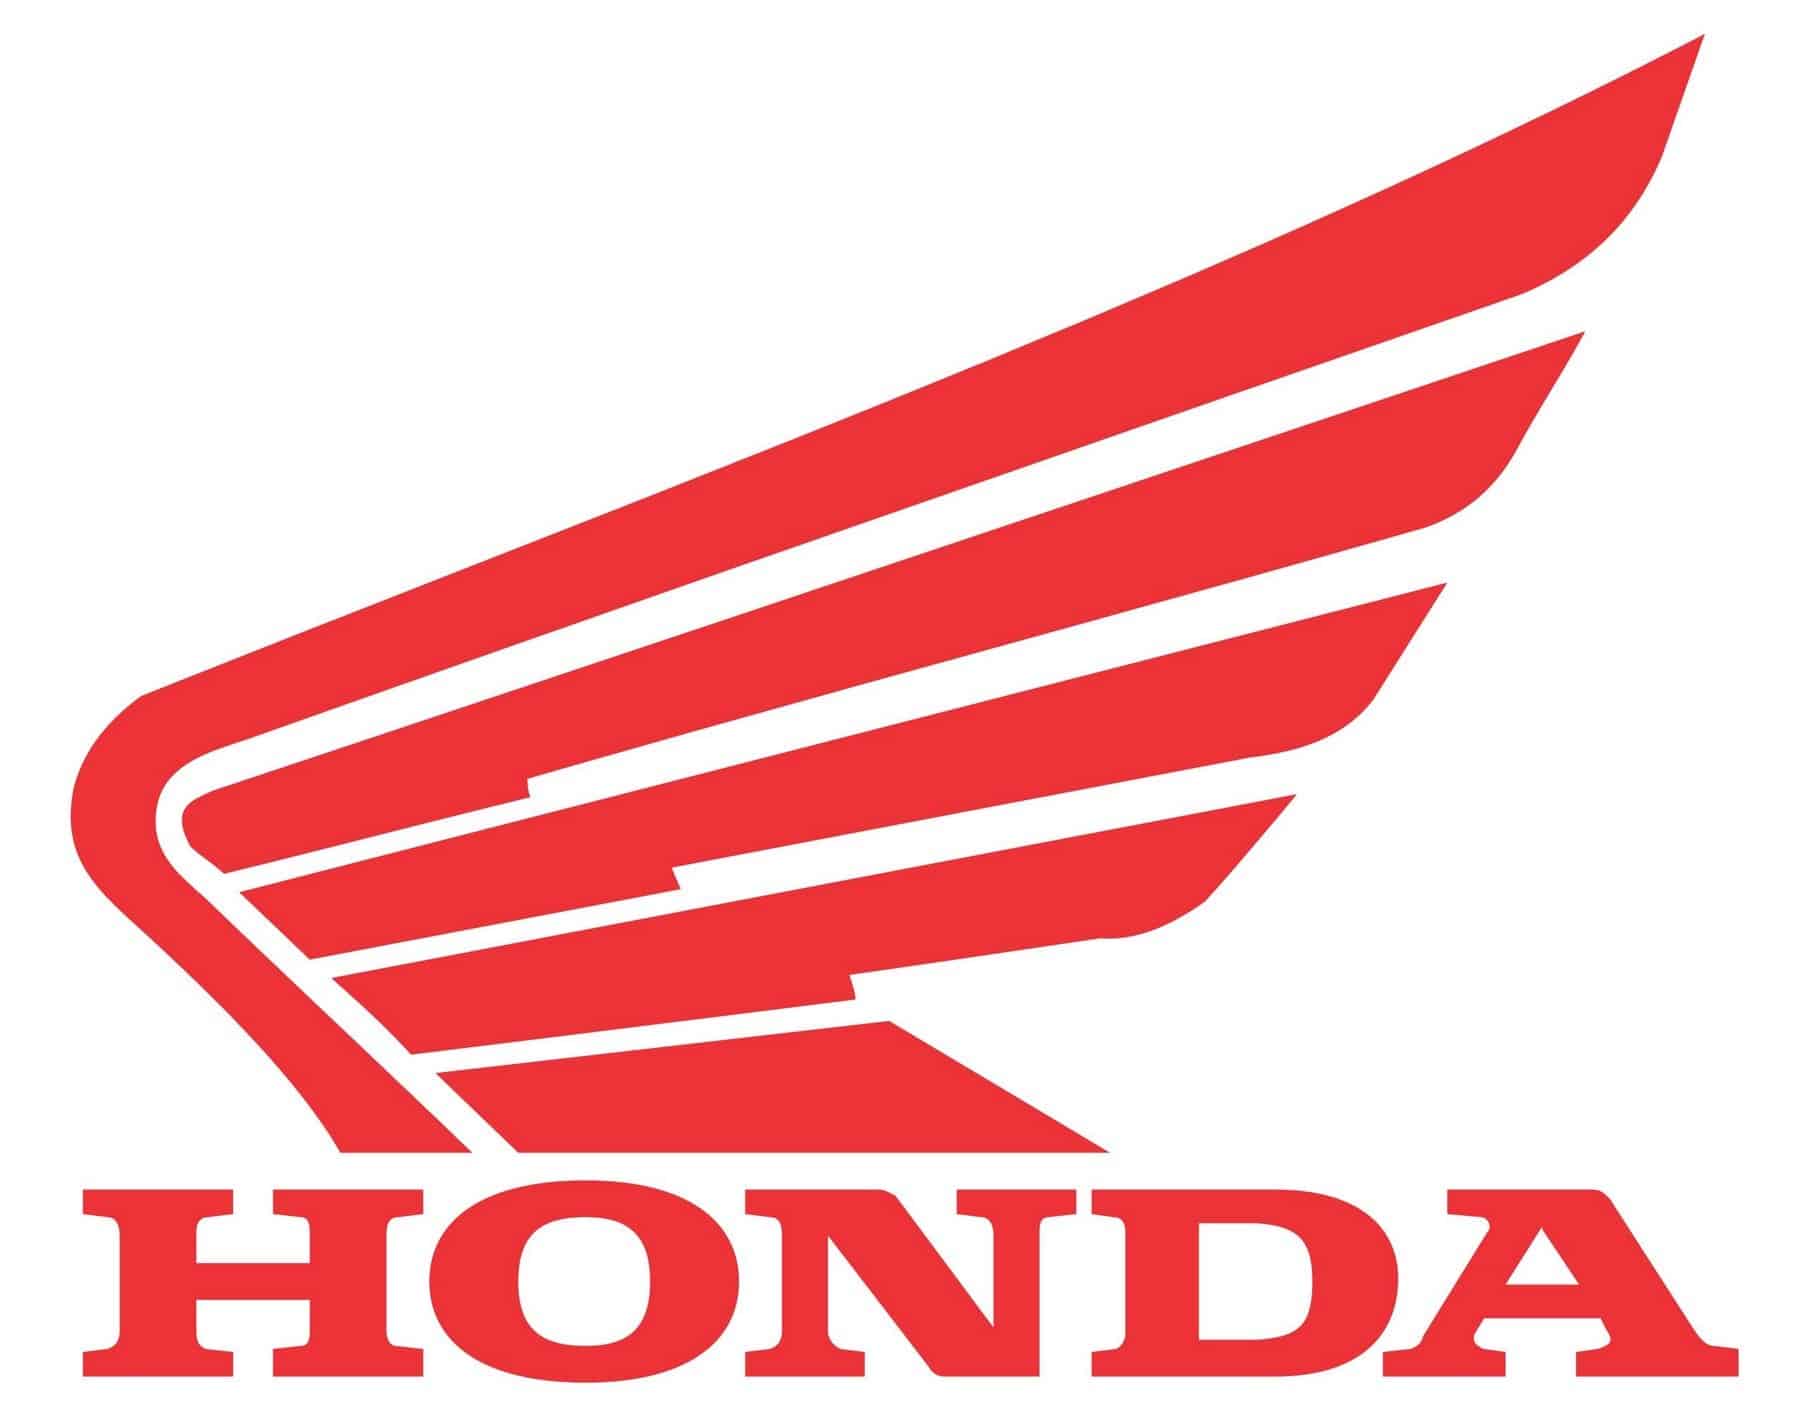 honda motocycle logo